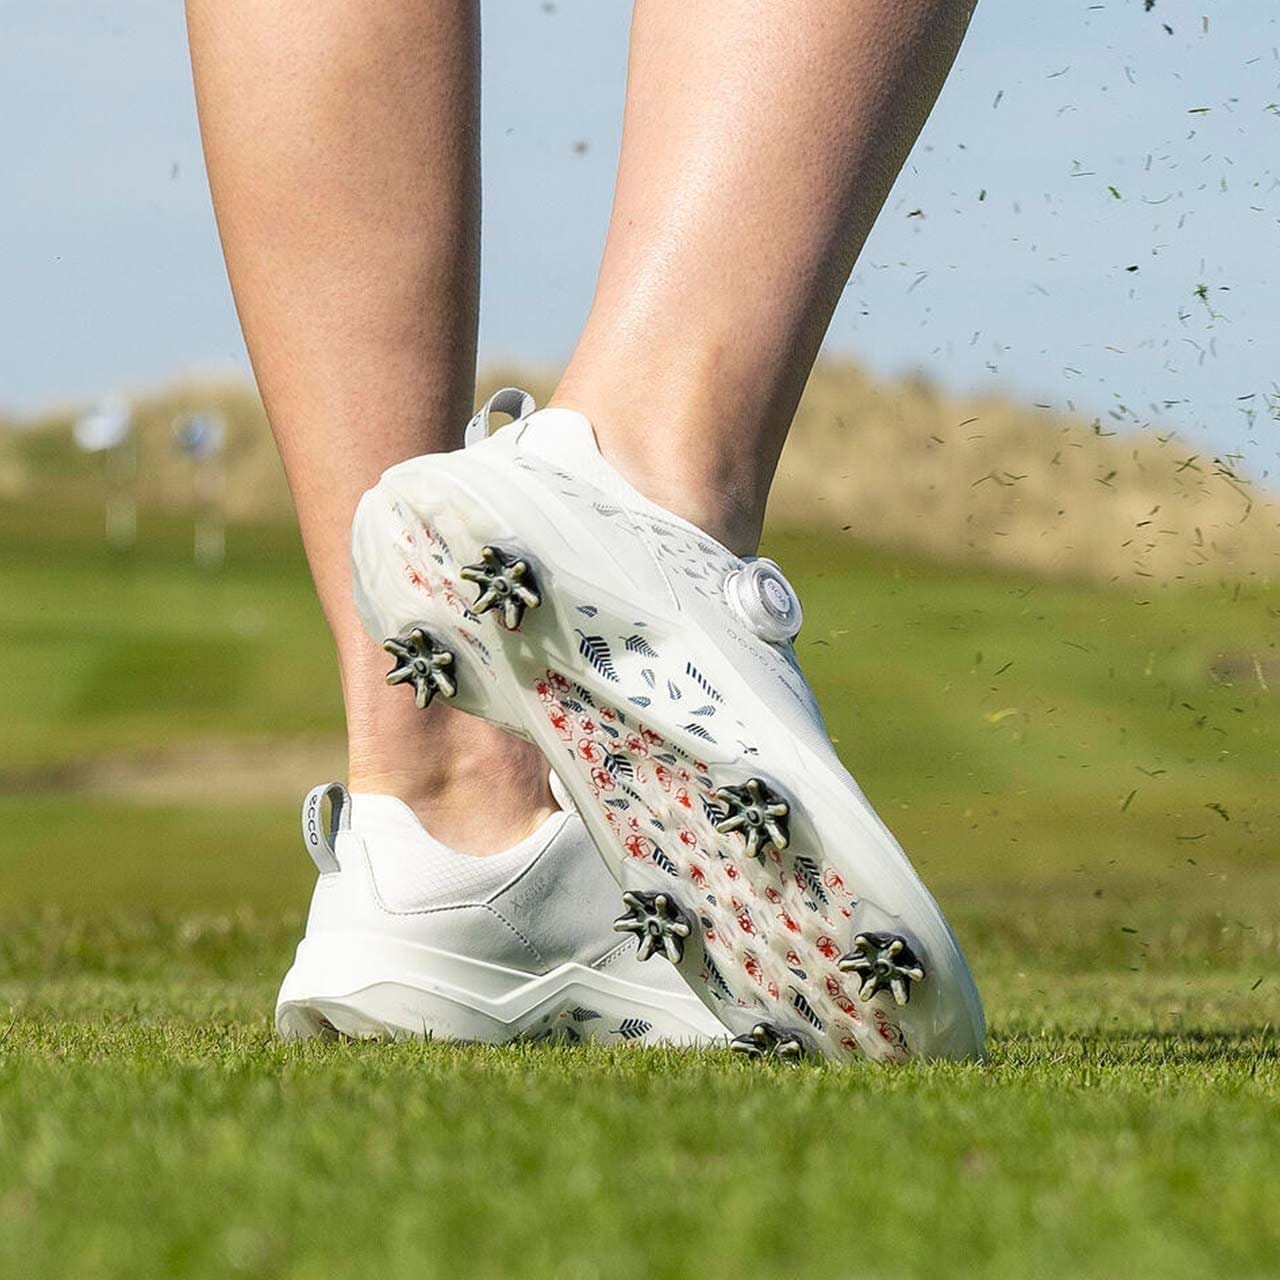 Woman wearing white golf shoes